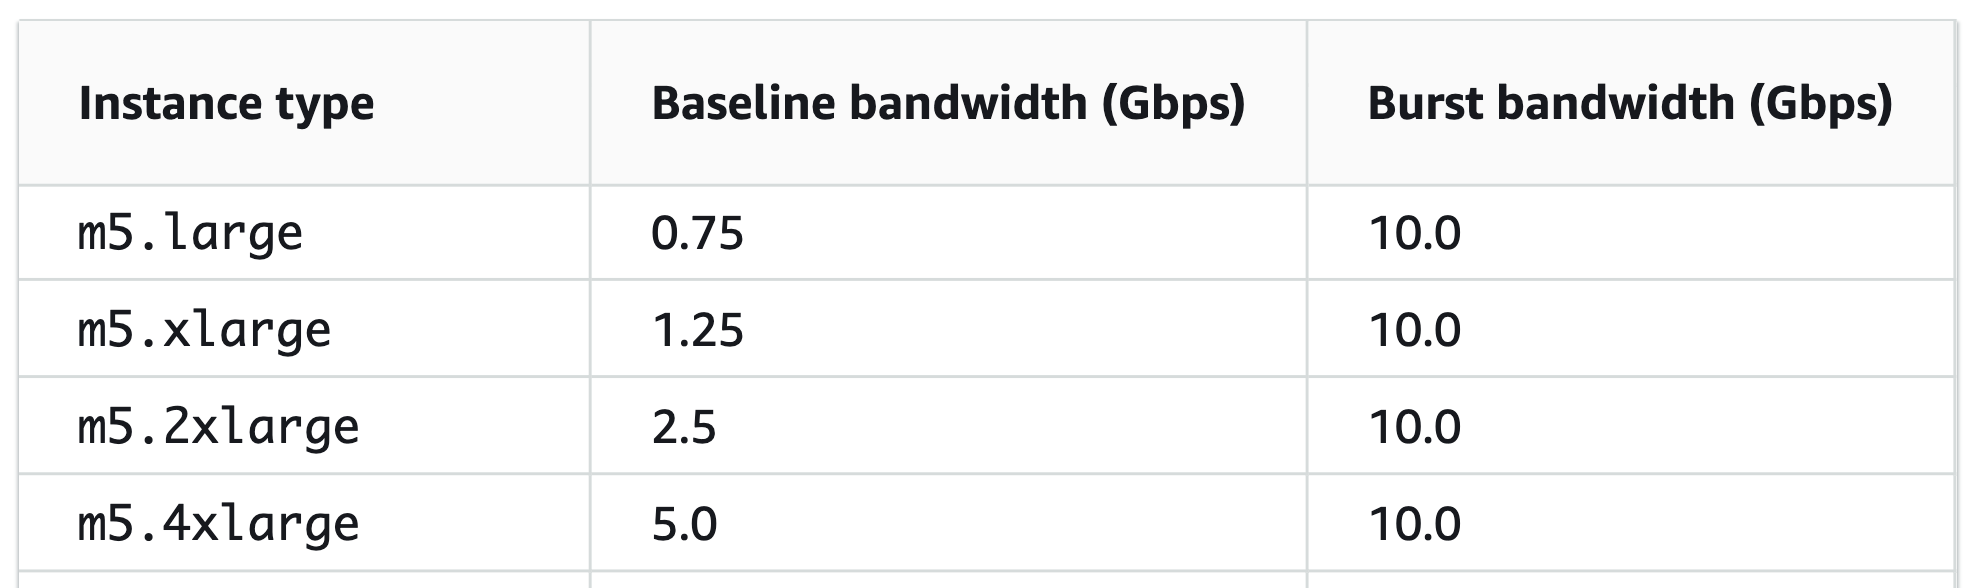 EC2 bandwidth table for general purpose instances